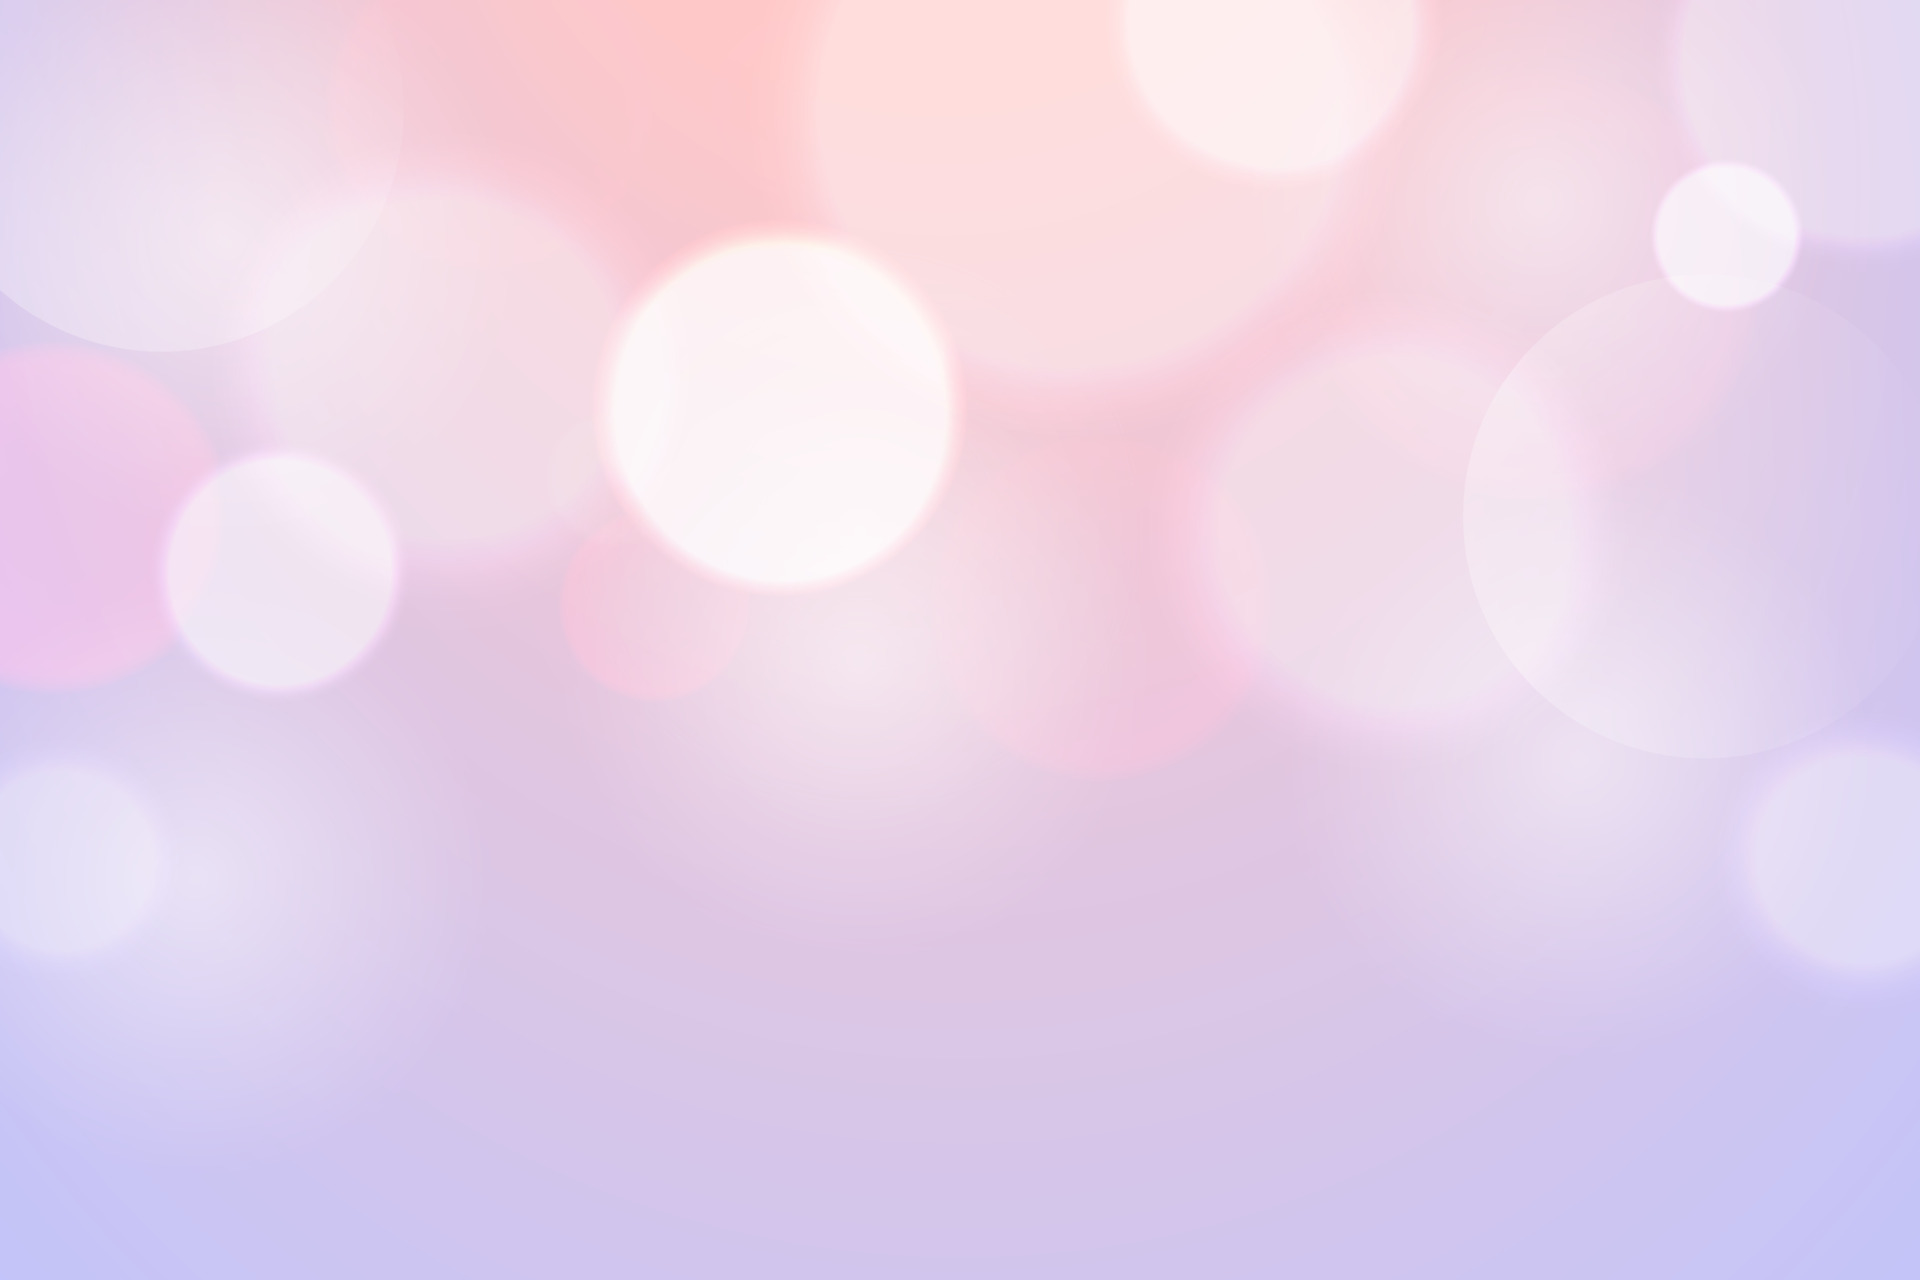 HD wallpaper: Bright lights-Ubuntu 13 system Widescreen Wallpape.., pink  and purple lights wallpaper | Wallpaper Flare